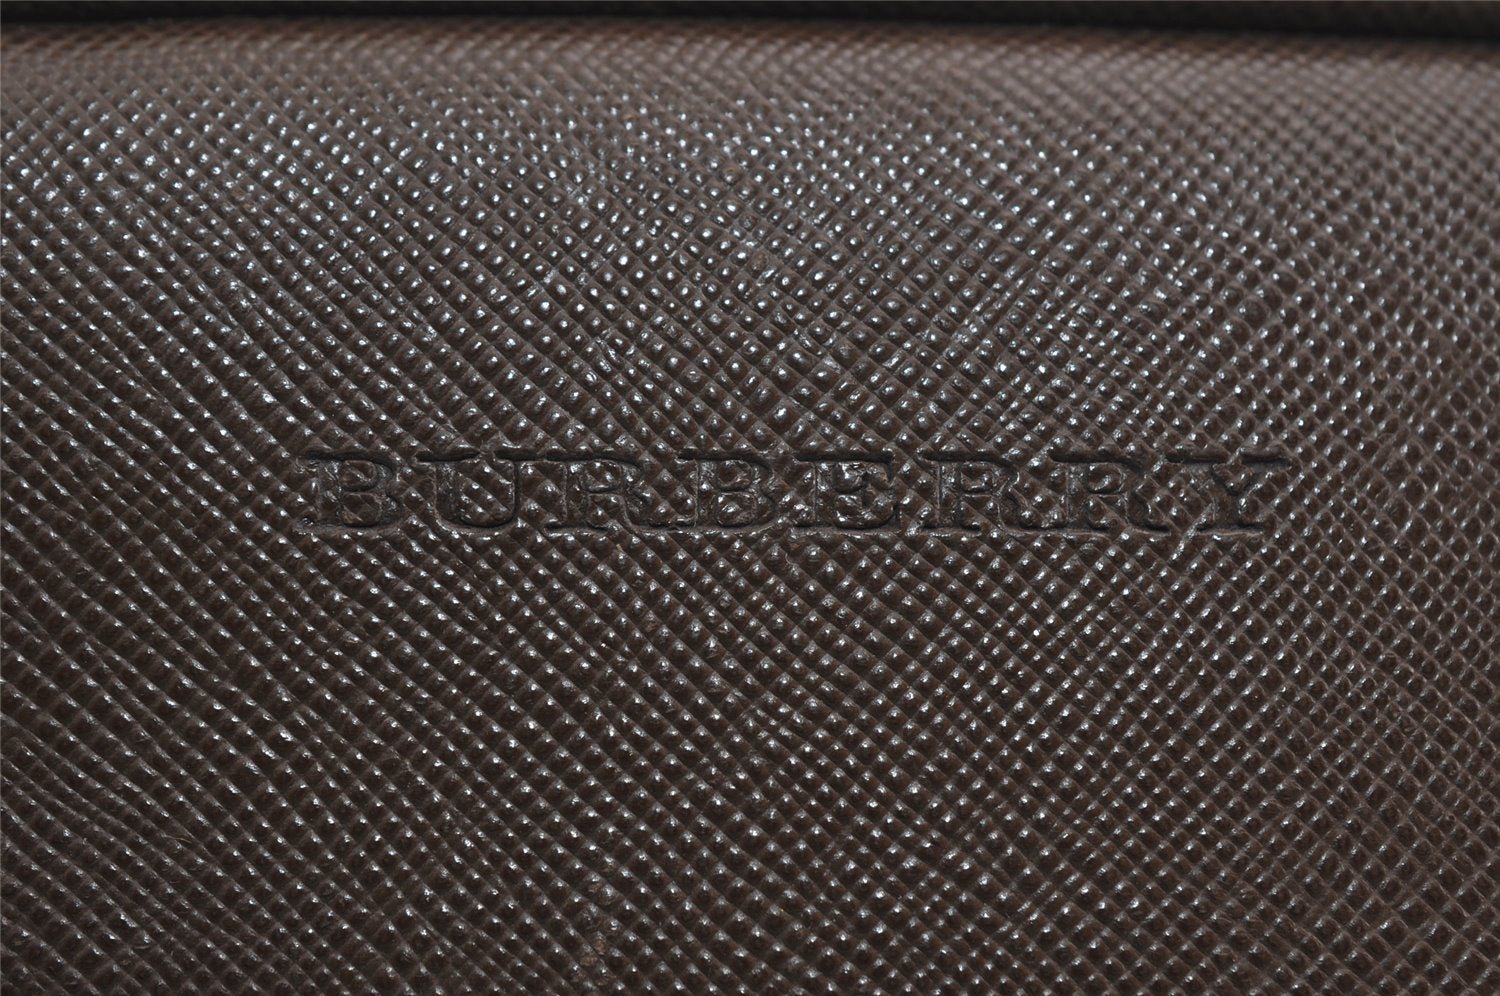 Authentic BURBERRY Nova Check Shoulder Cross Body Bag Canvas Leather Beige 1133I